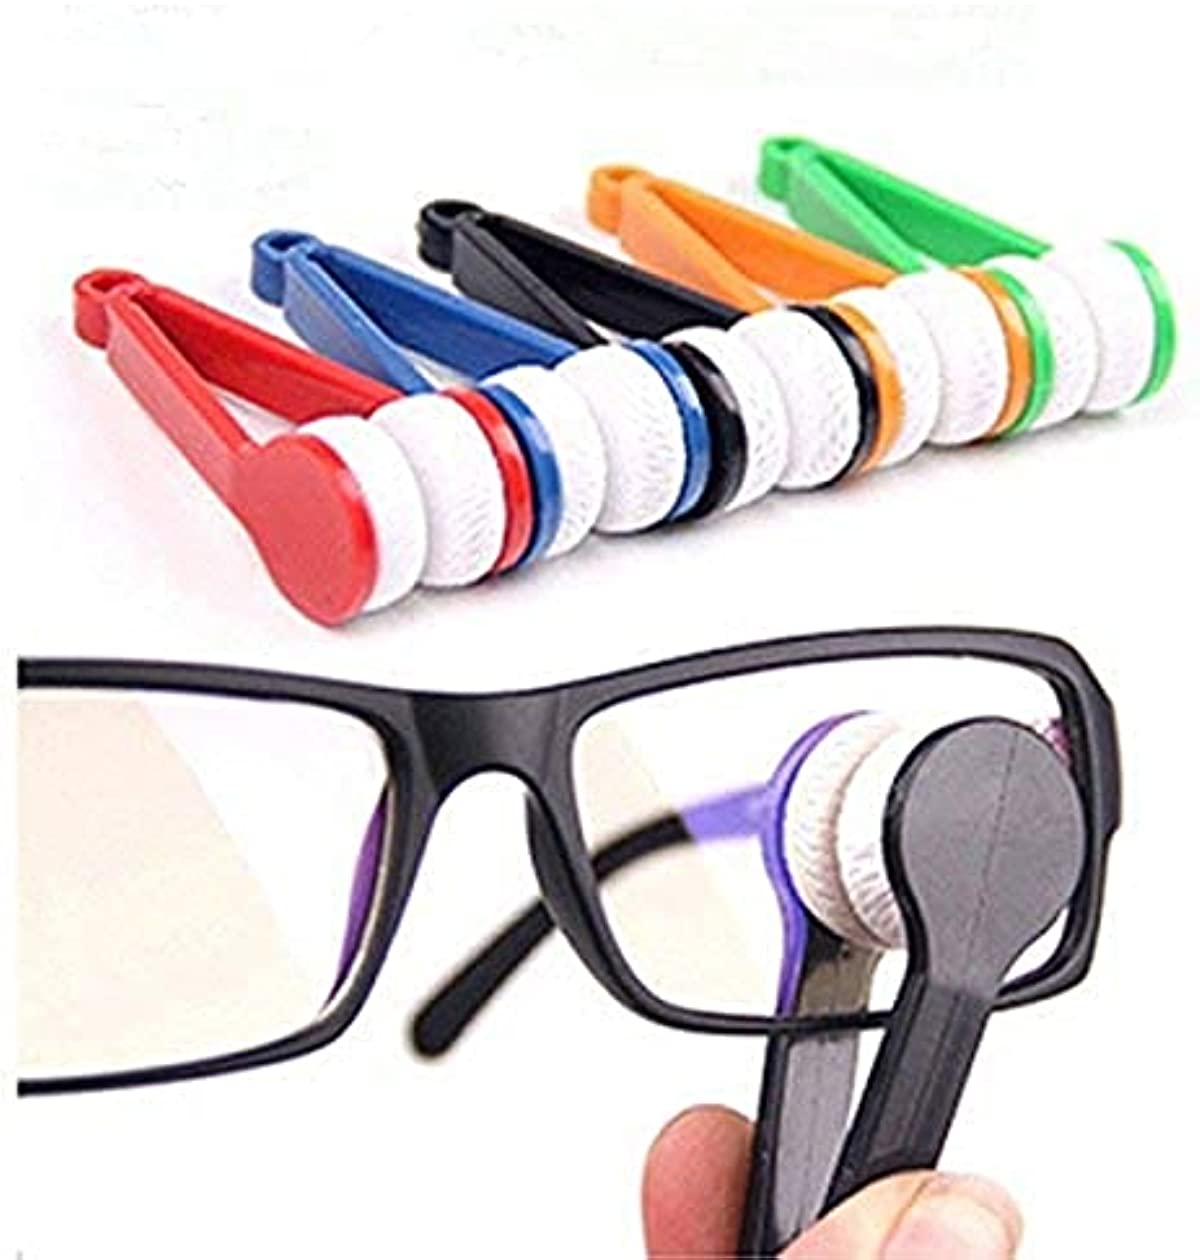 12 pcs Mini Sun Glasses Eyeglass Microfiber Spectacles Cleaner Brush Cleaning Tool,Random Color (12)